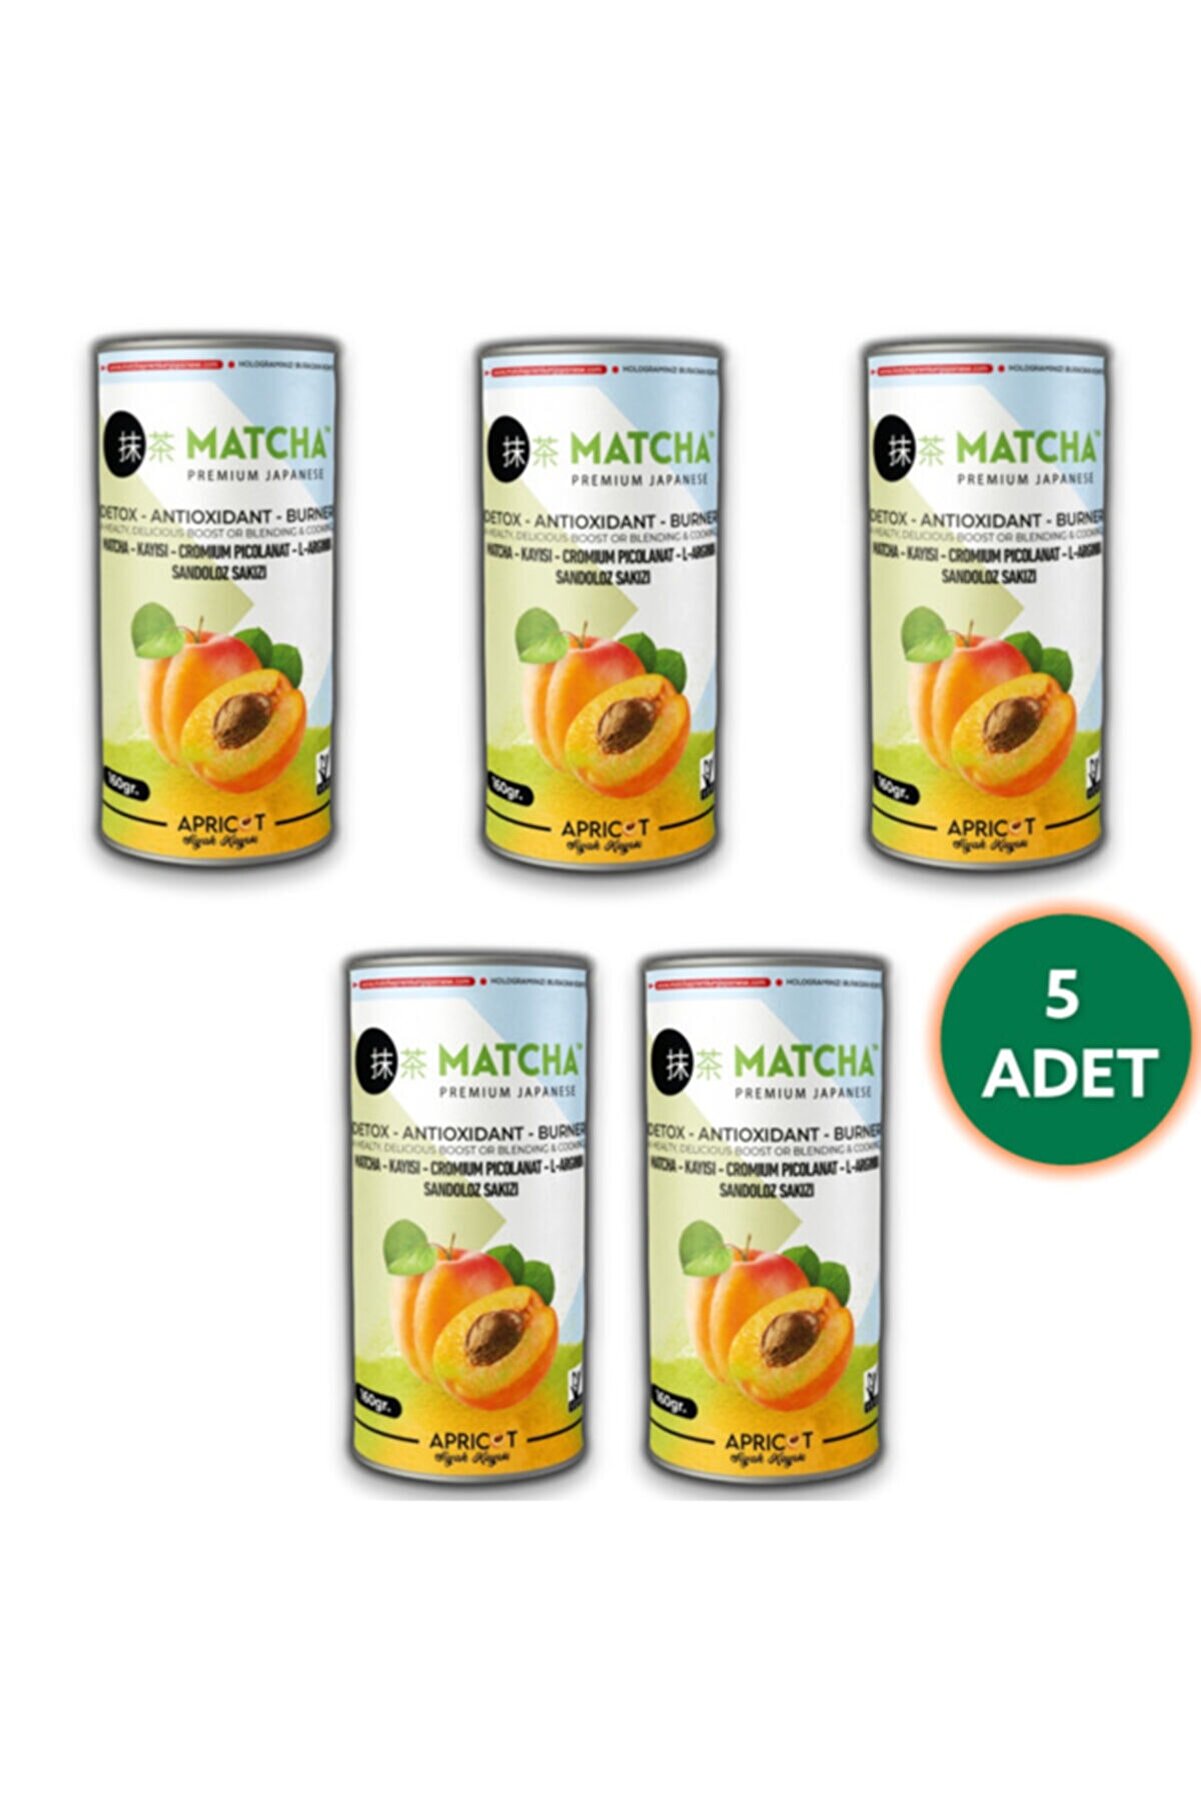 Matcha Premium Japanese Kayısı Aromalı, Matcha Apricot Form Çayı 20 X 8 gr (detox Burner), 5 Kutu